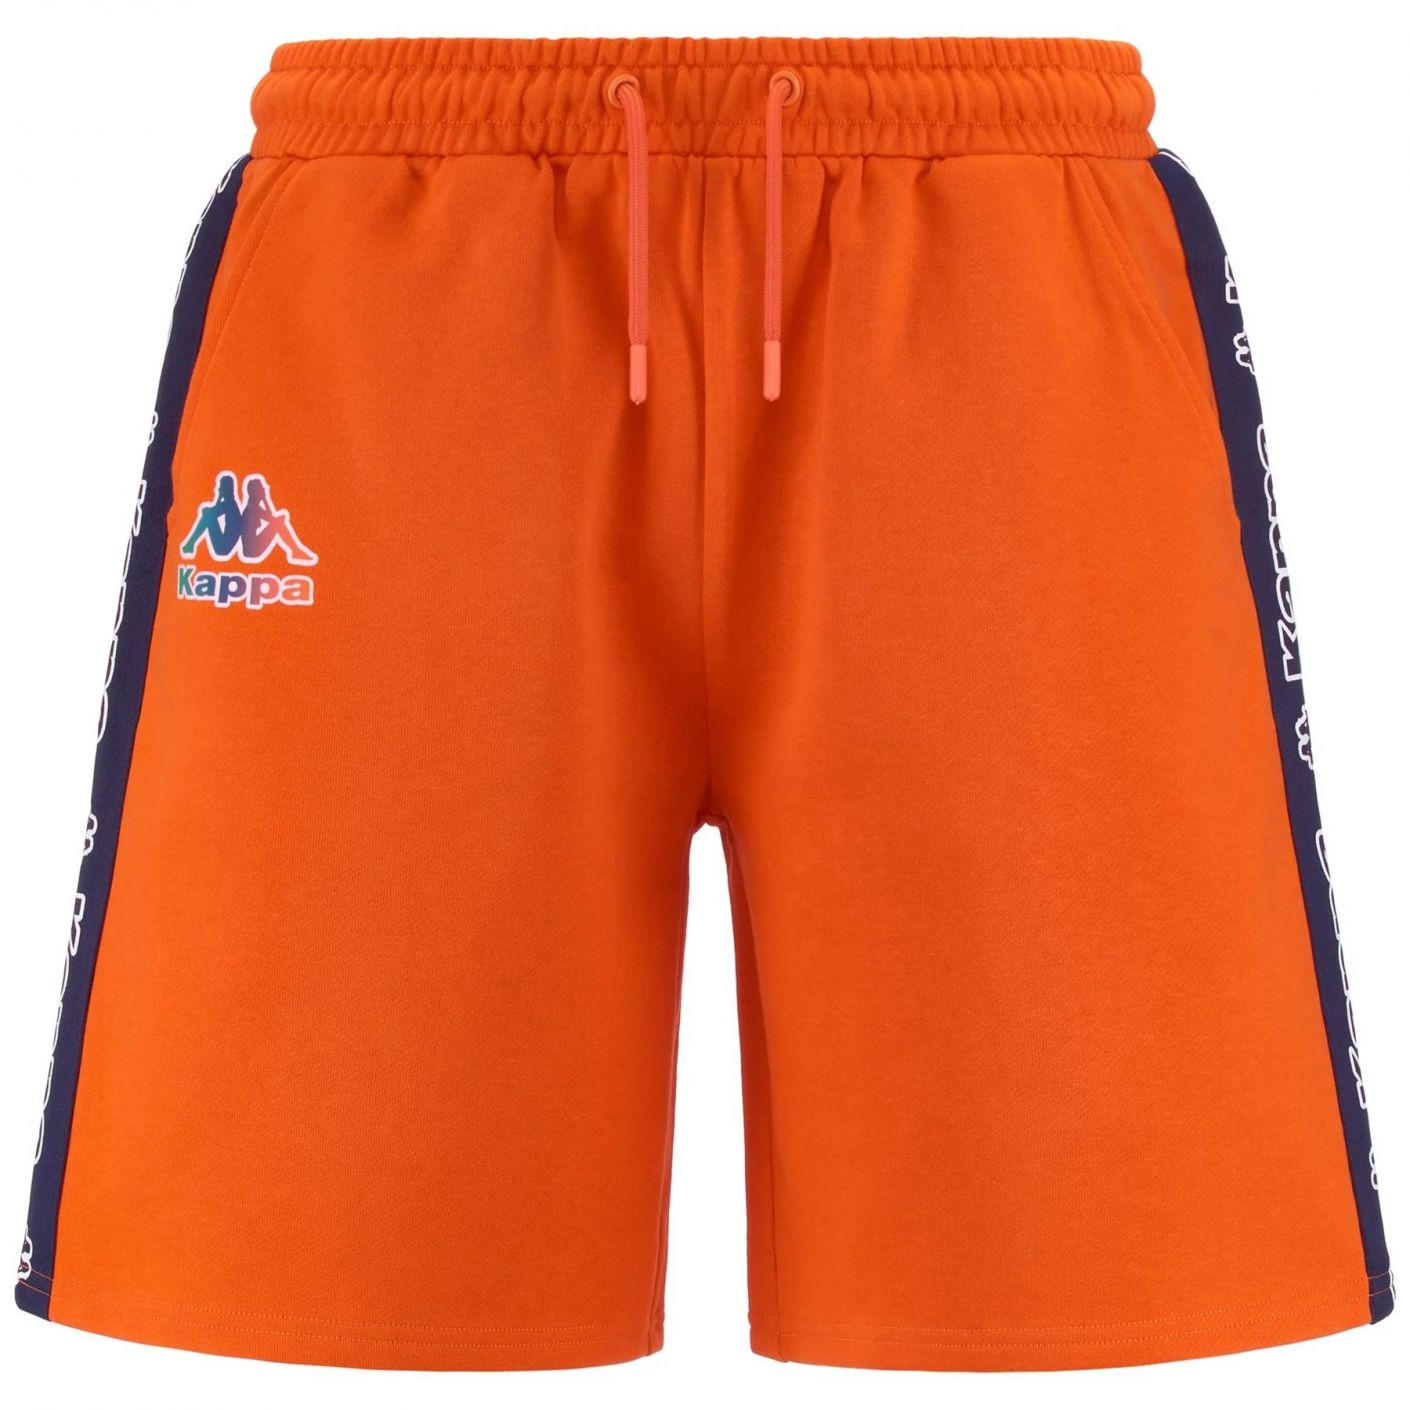 Kappa Short Logo Fulto Orange Vibrant da Uomo